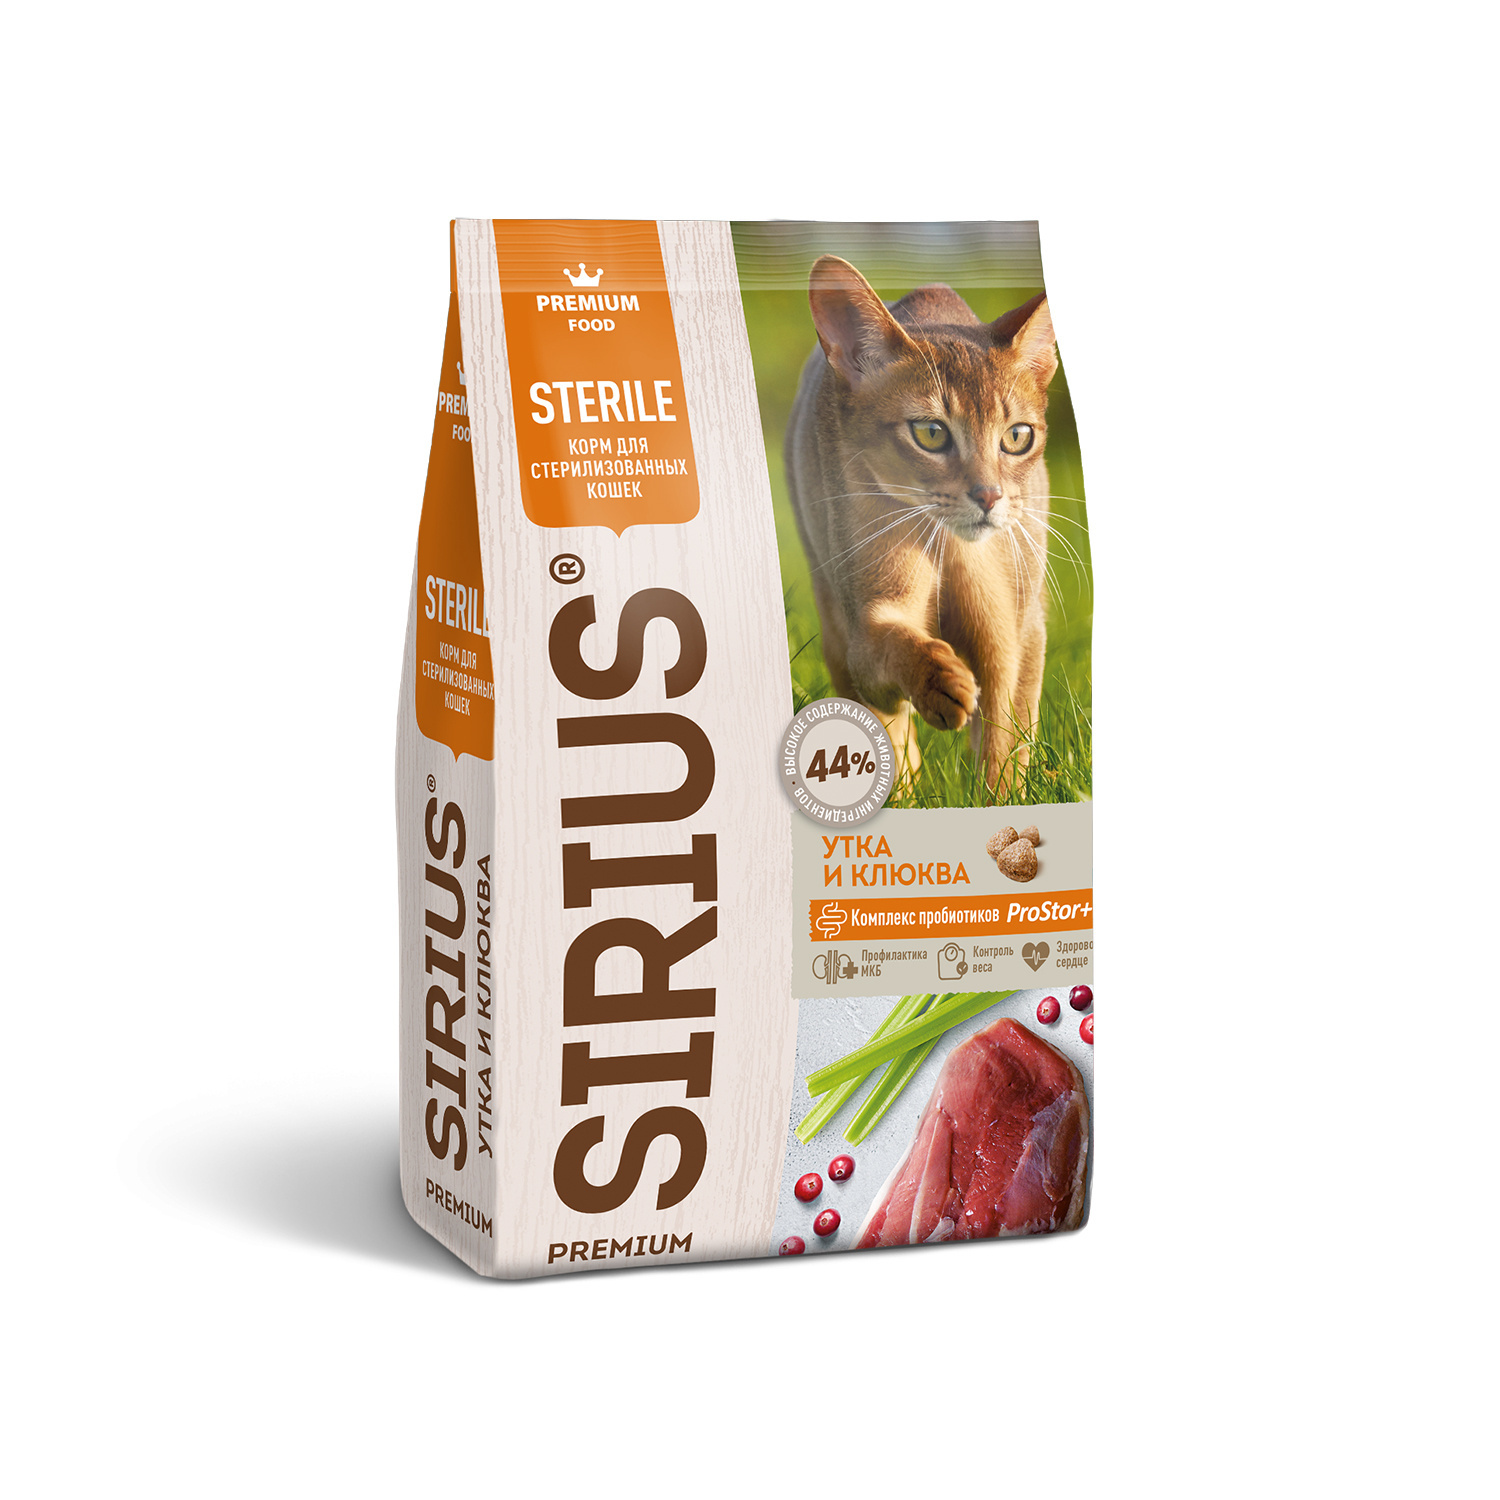 Sirius Sirius сухой корм для стерилизованных кошек, утка и клюква (1,5 кг) сухой корм для стерилизованных кошек sirius утка и клюква 1 5 кг р